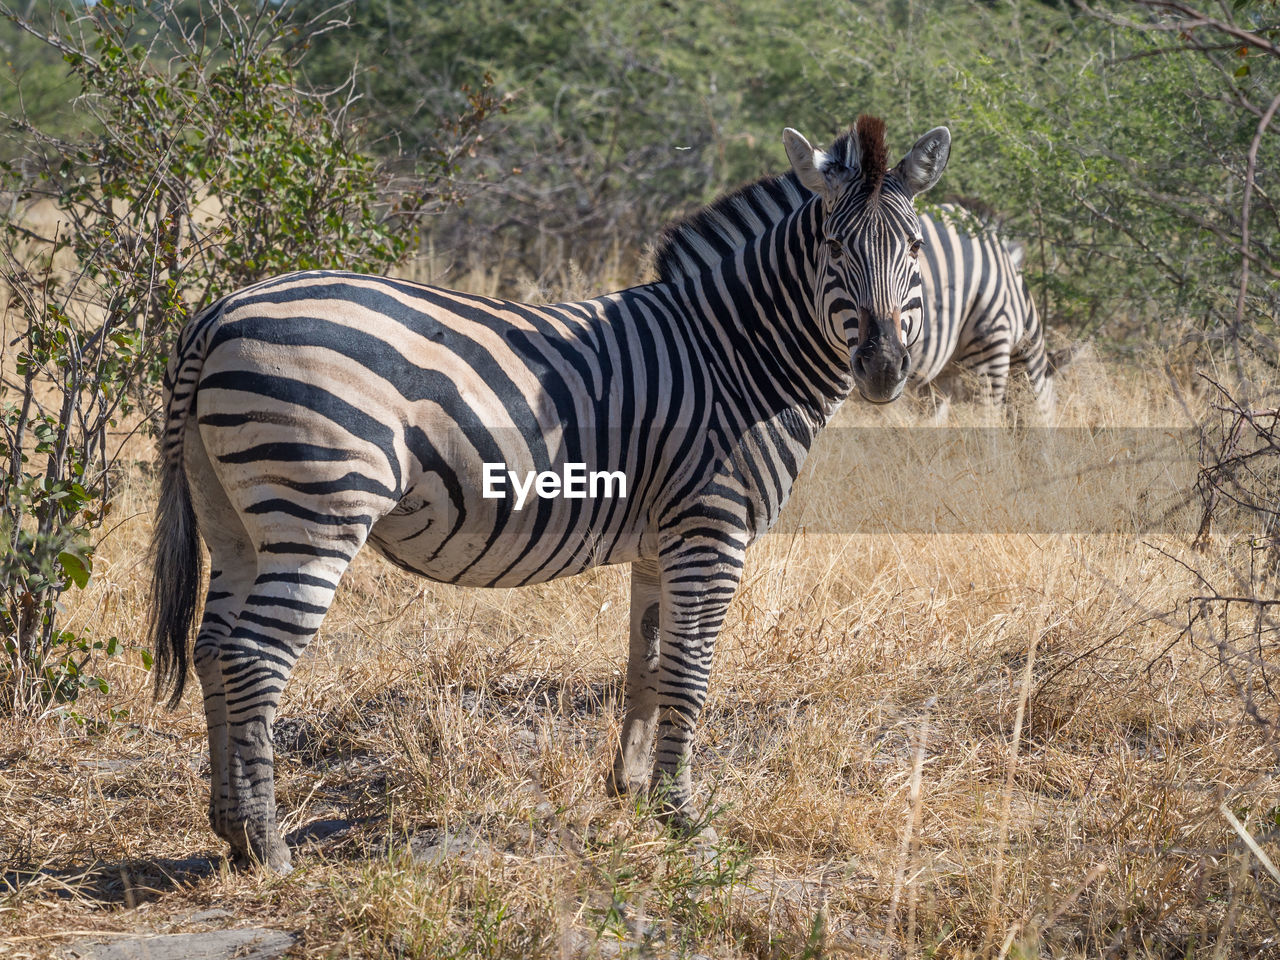 Zebra standing in dry grass at moremi game reserve, botswana, africa